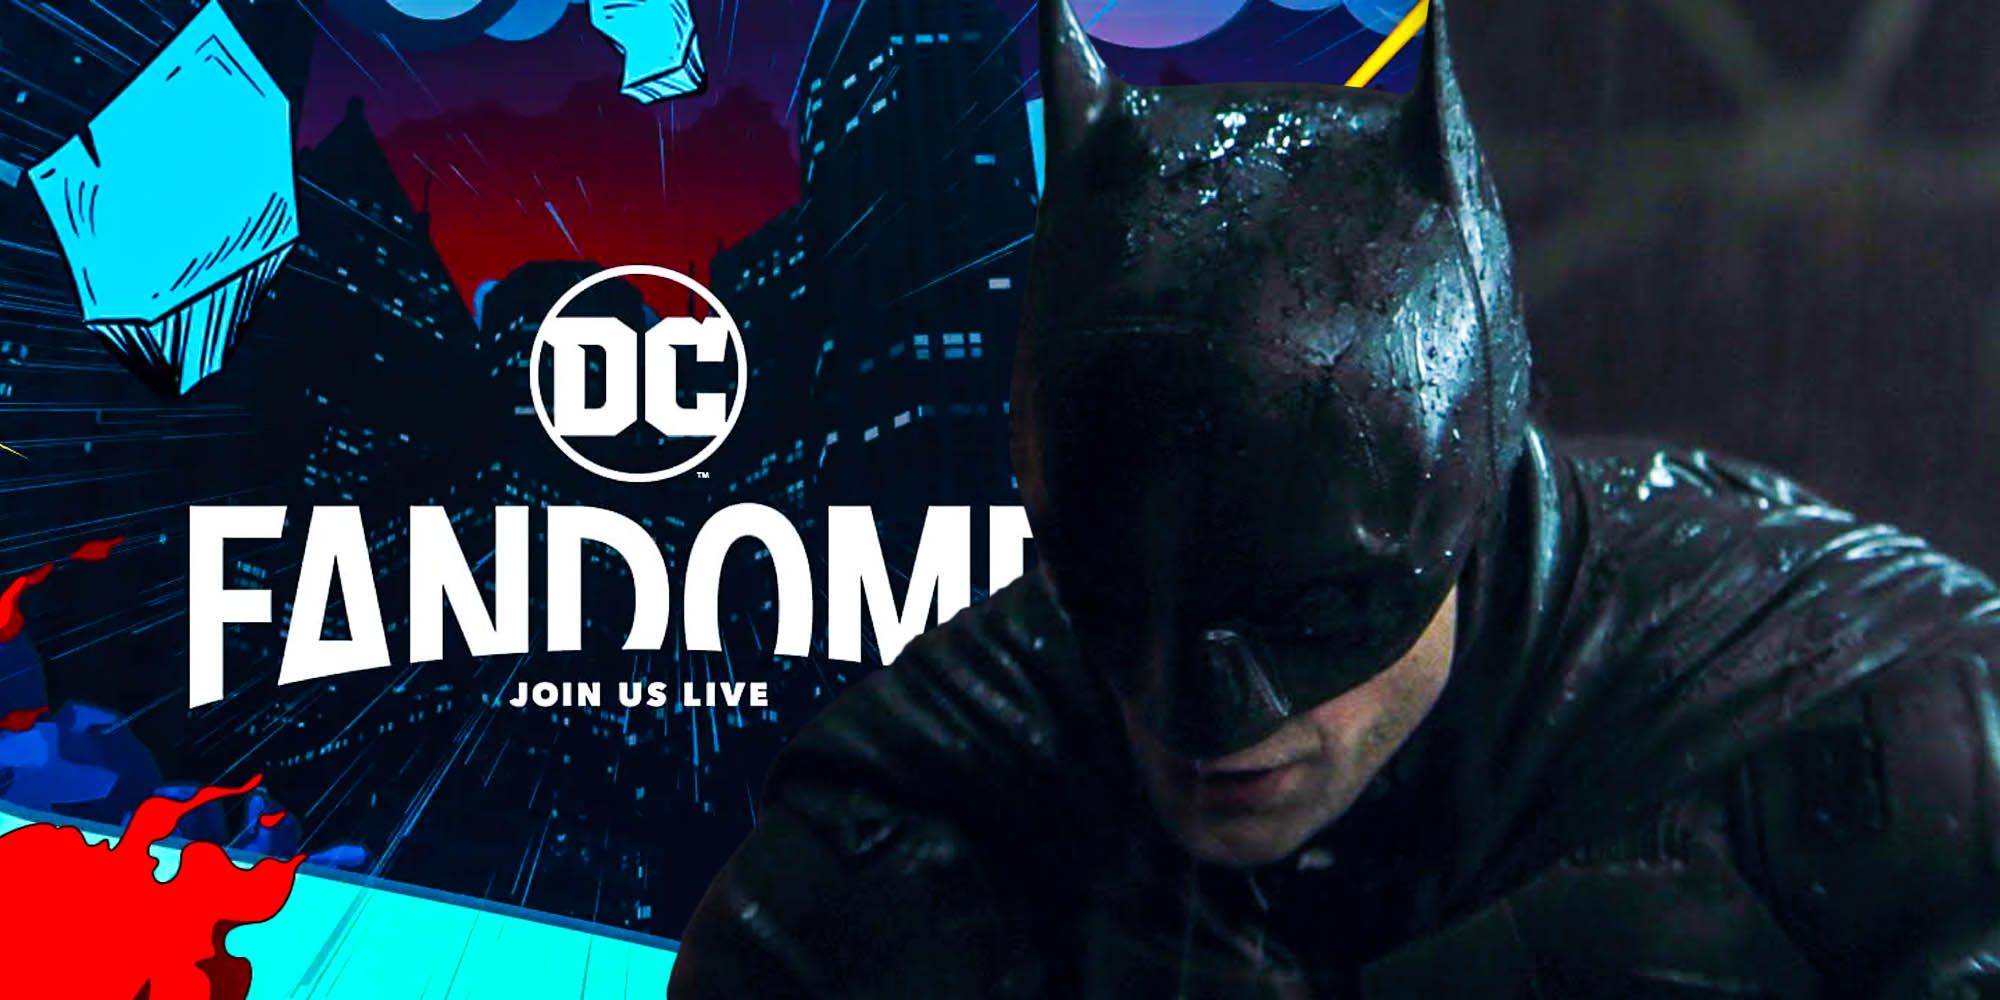 DC fandome what time The batman trailer will release